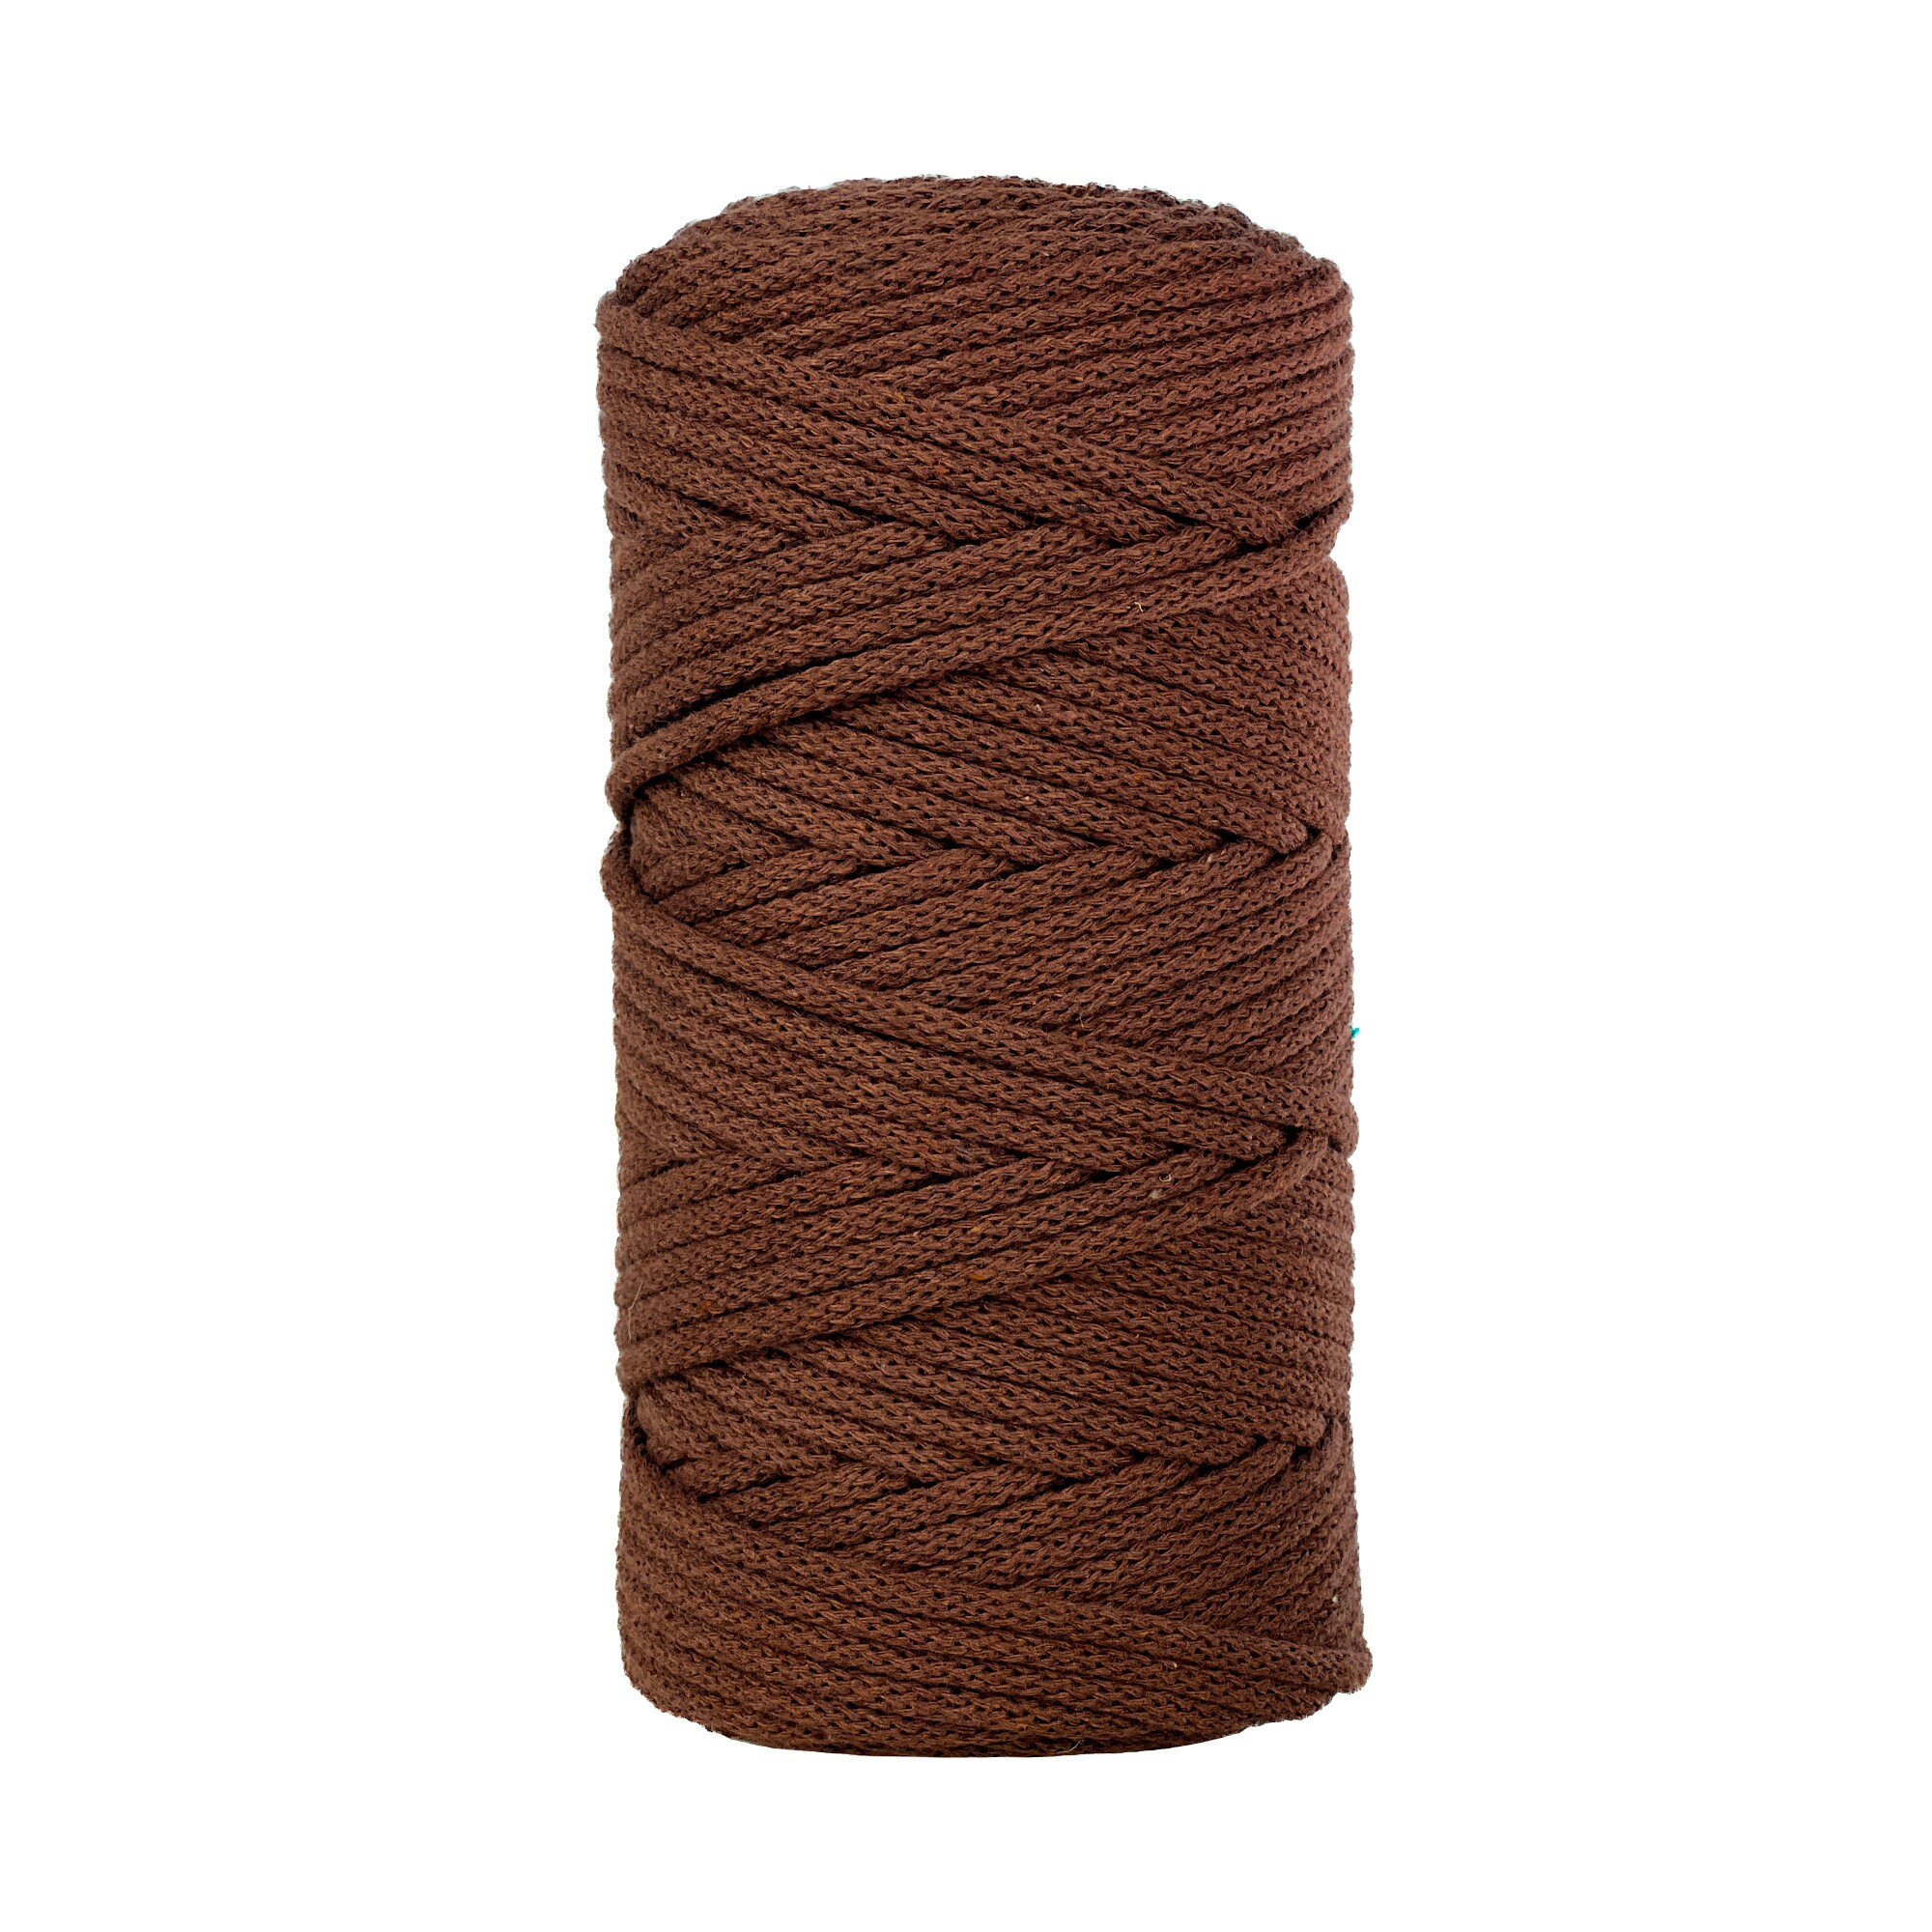 Premium Braided Cotton Cord 5mm X 109yards, CHOCOLATE SWIRL, Macrame and  Crocheting Rope, Soft Cotton Air 